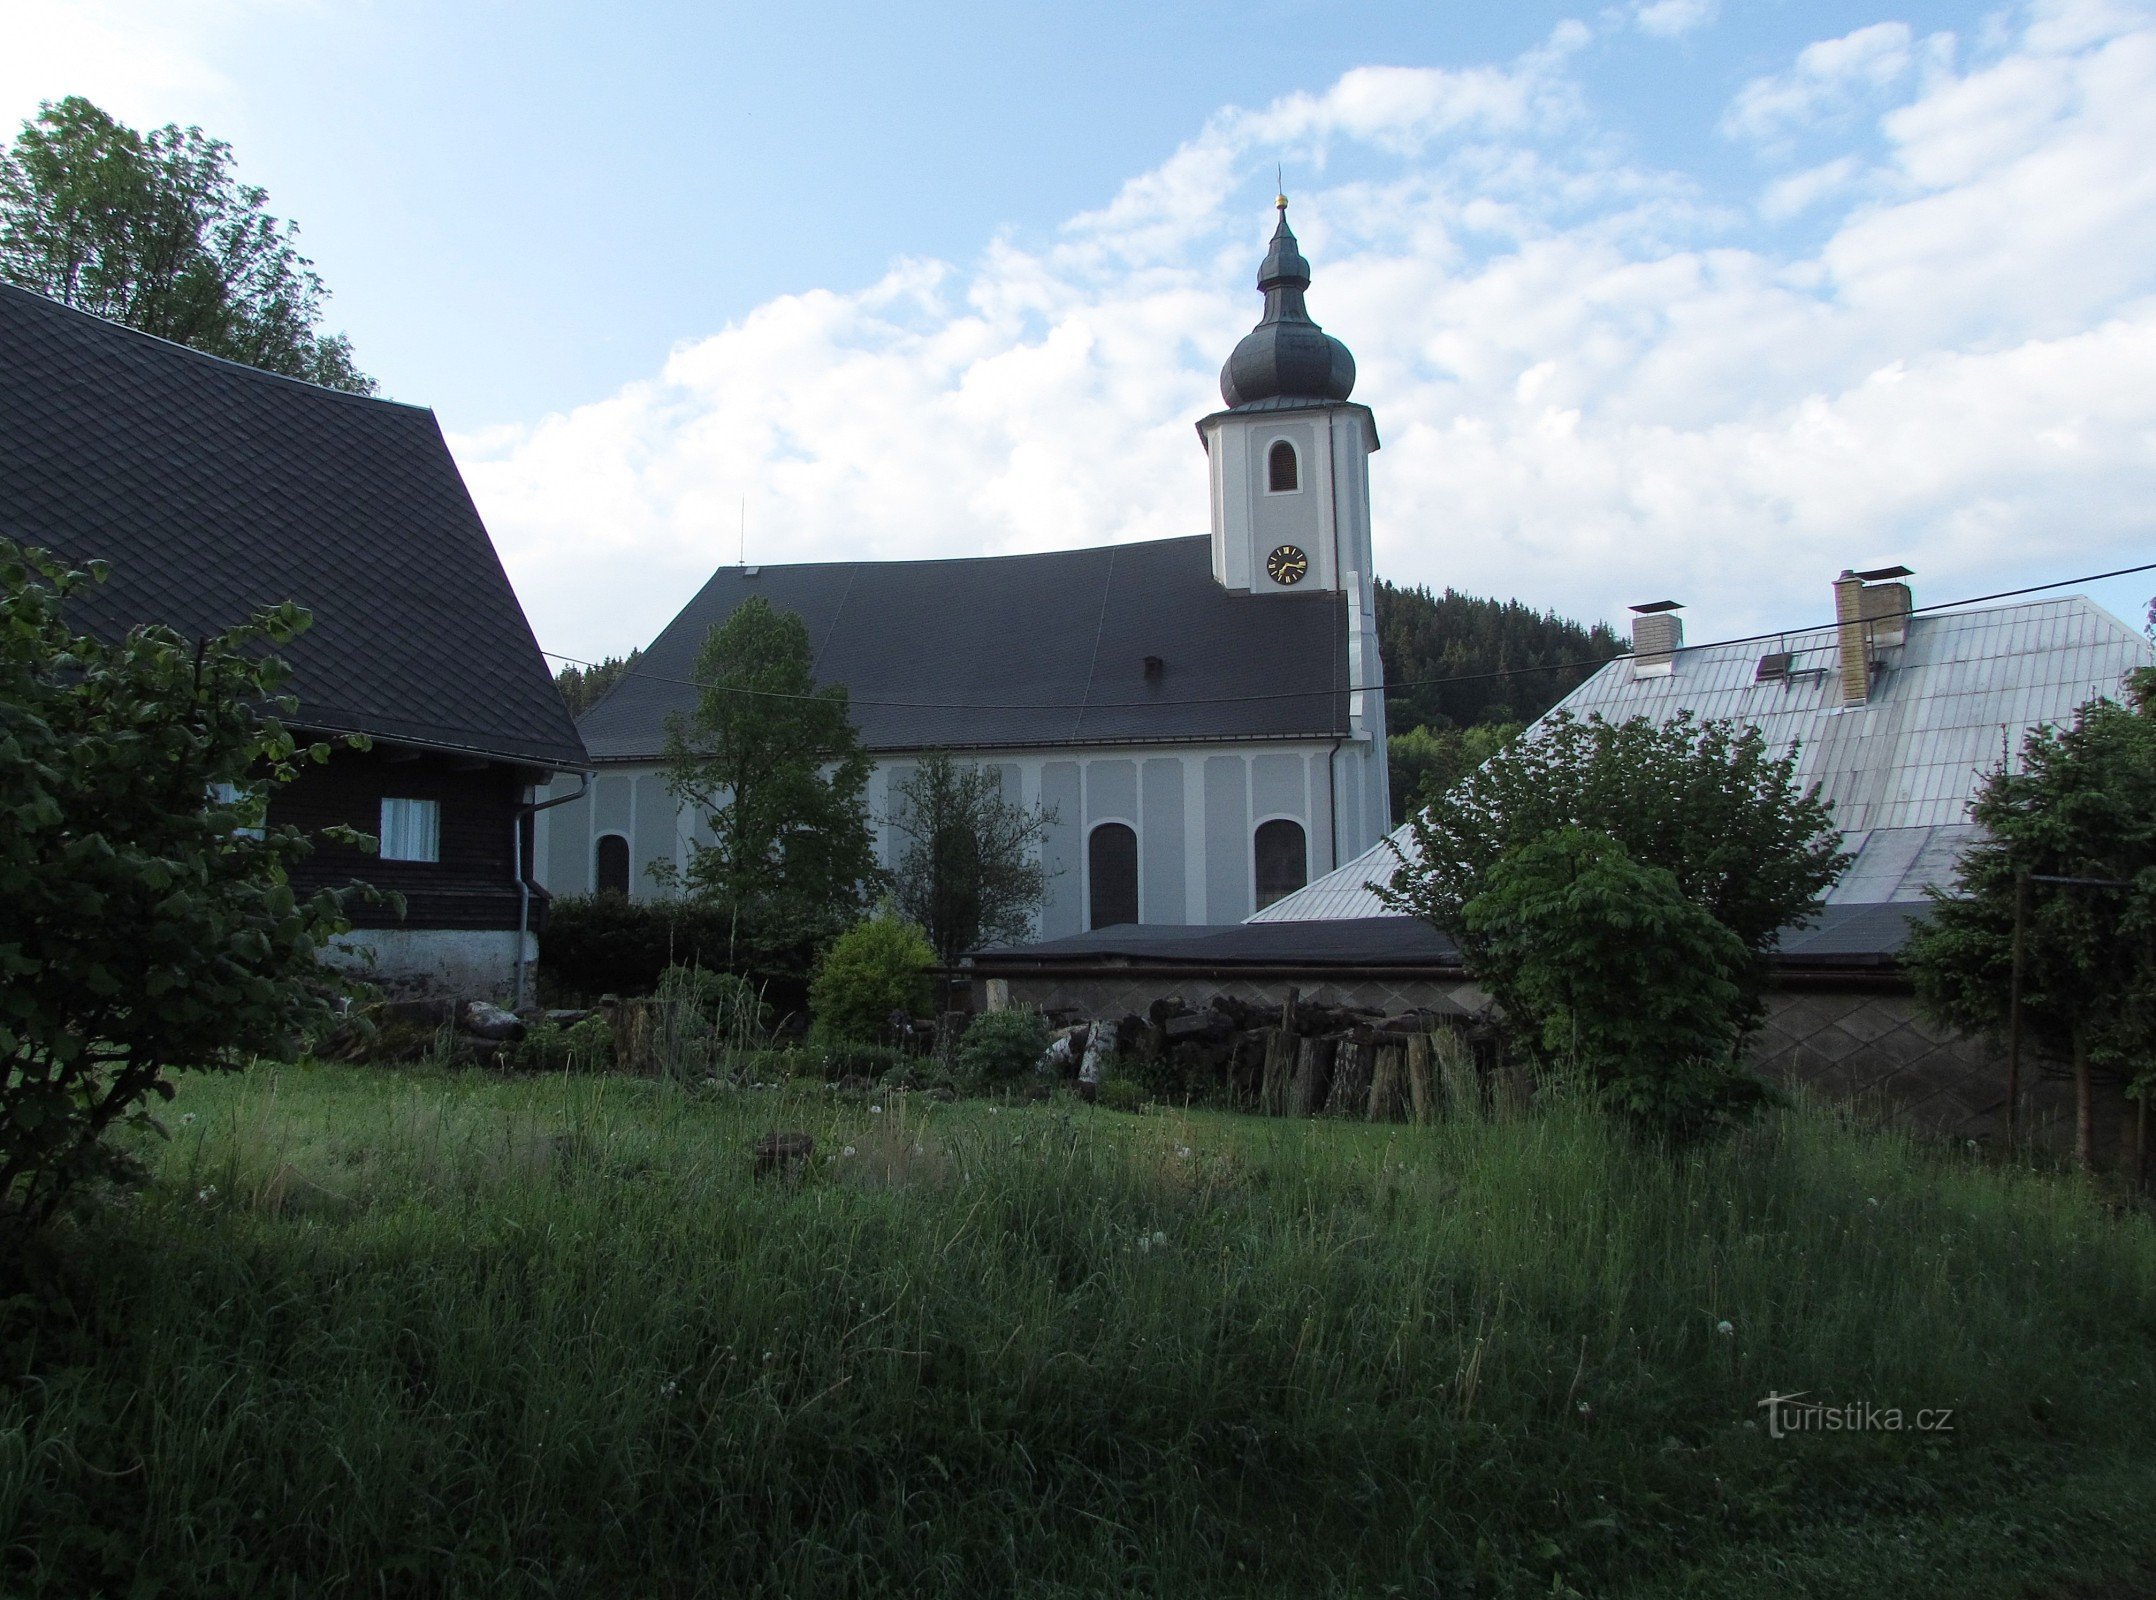 Heřmanovice - Biserica Sf. Andrei și alte monumente sacre